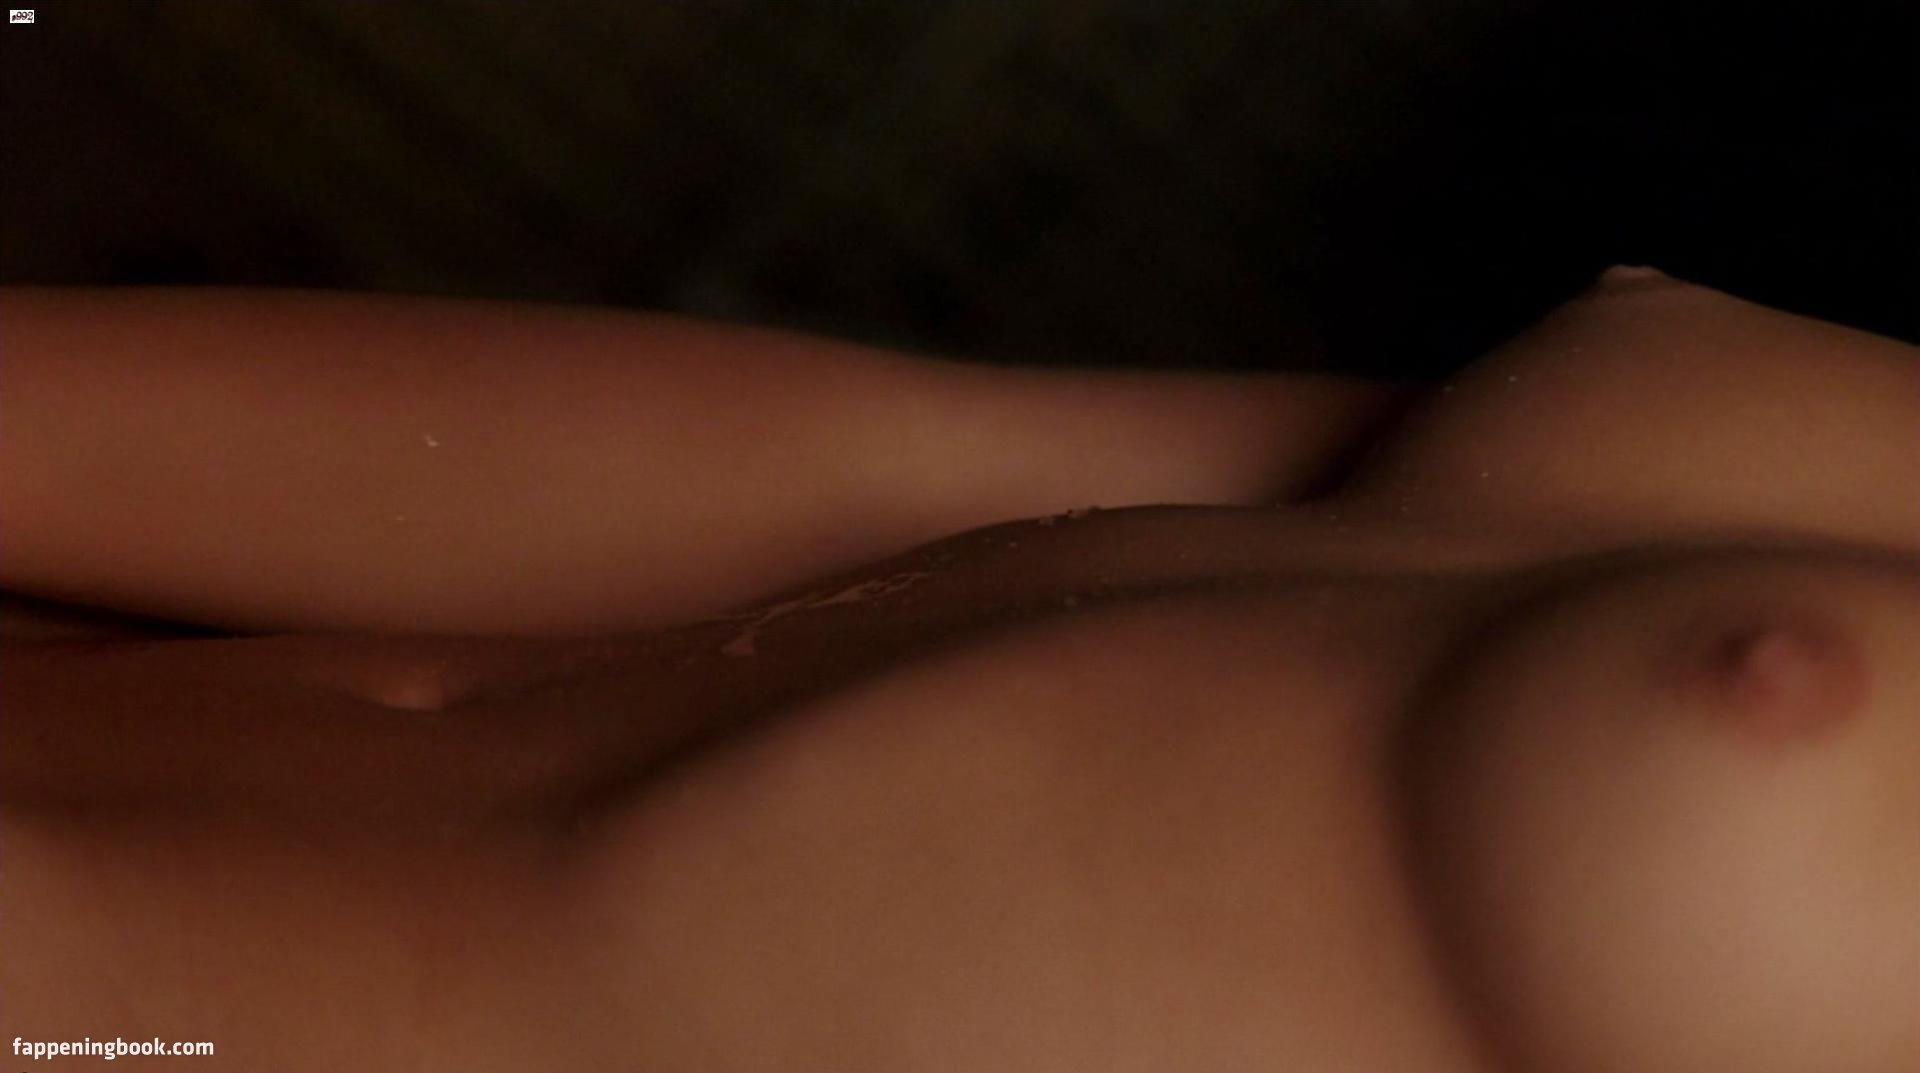 Jessica Alba Nude, The Fappening - Photo #254614 - FappeningBook.